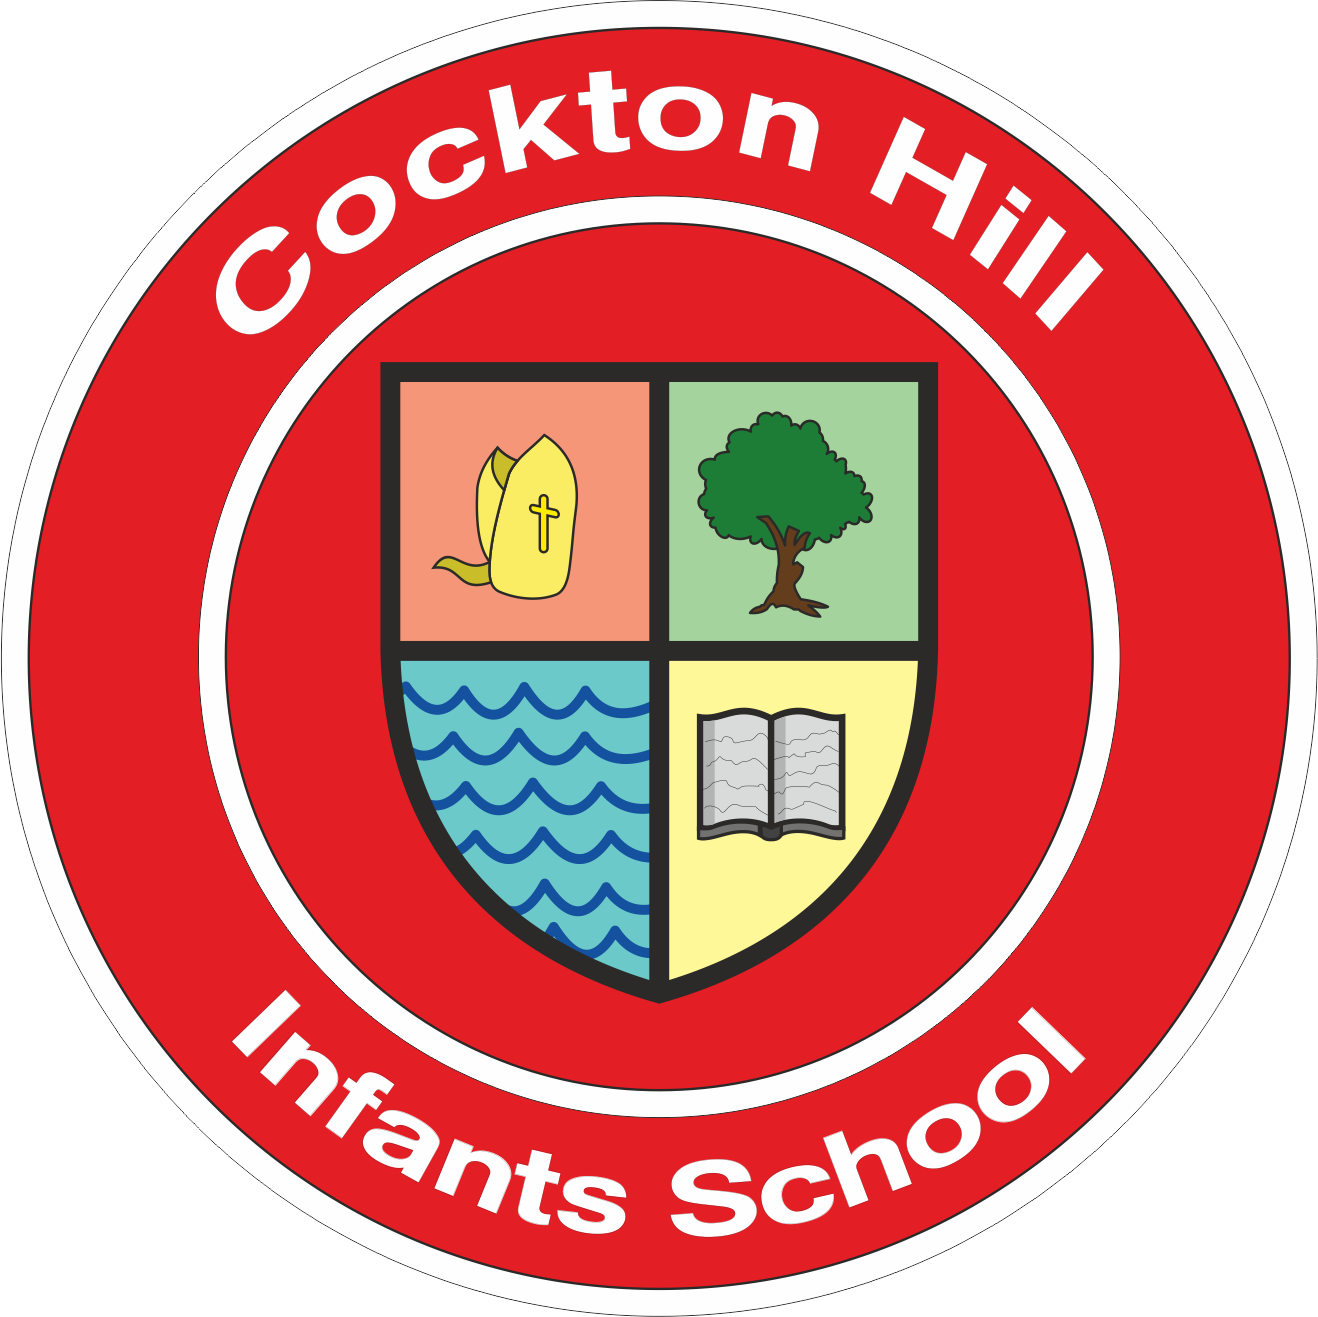 Cockton Hill Infants